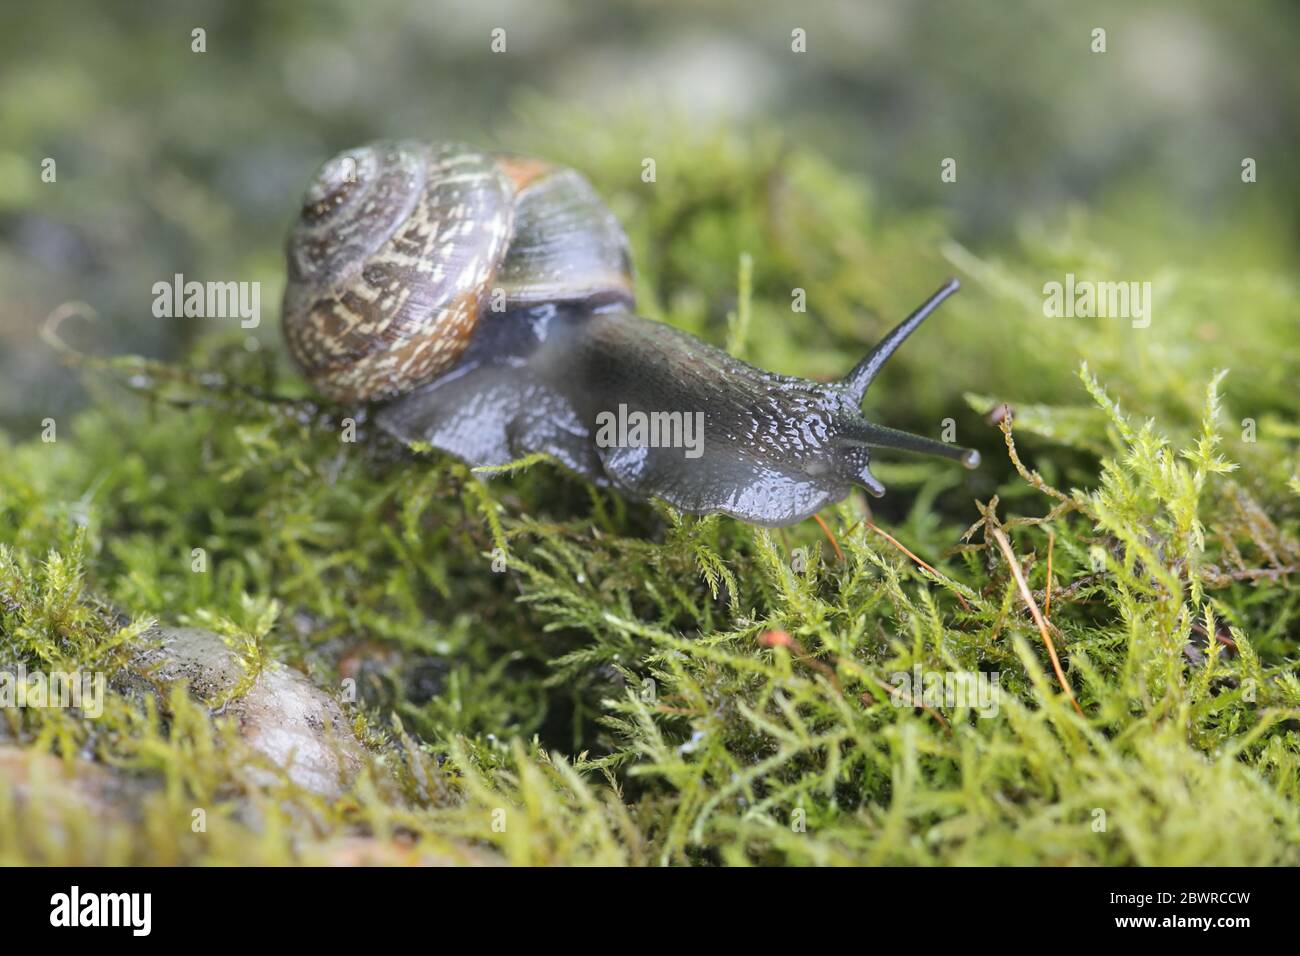 Arianta arbustorum, un escargot de terre connu sous le nom d'escargot de copse, un mollusque terrestre de gastropodes pulmonés de Finlande Banque D'Images